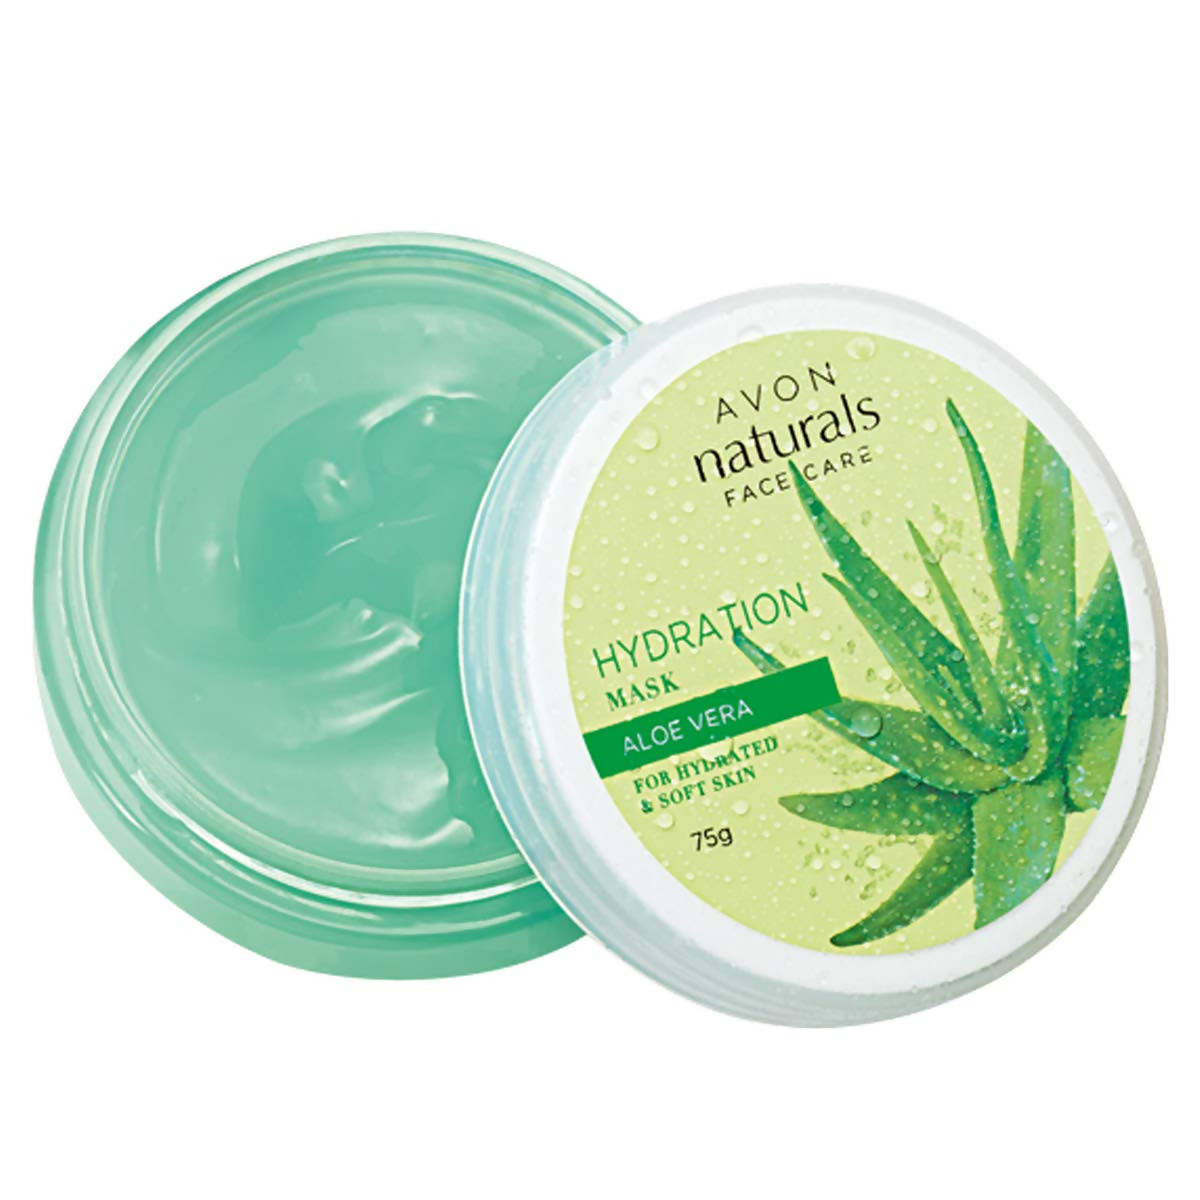 Avon Naturals Face Care Hydration Mask Aloe Vera